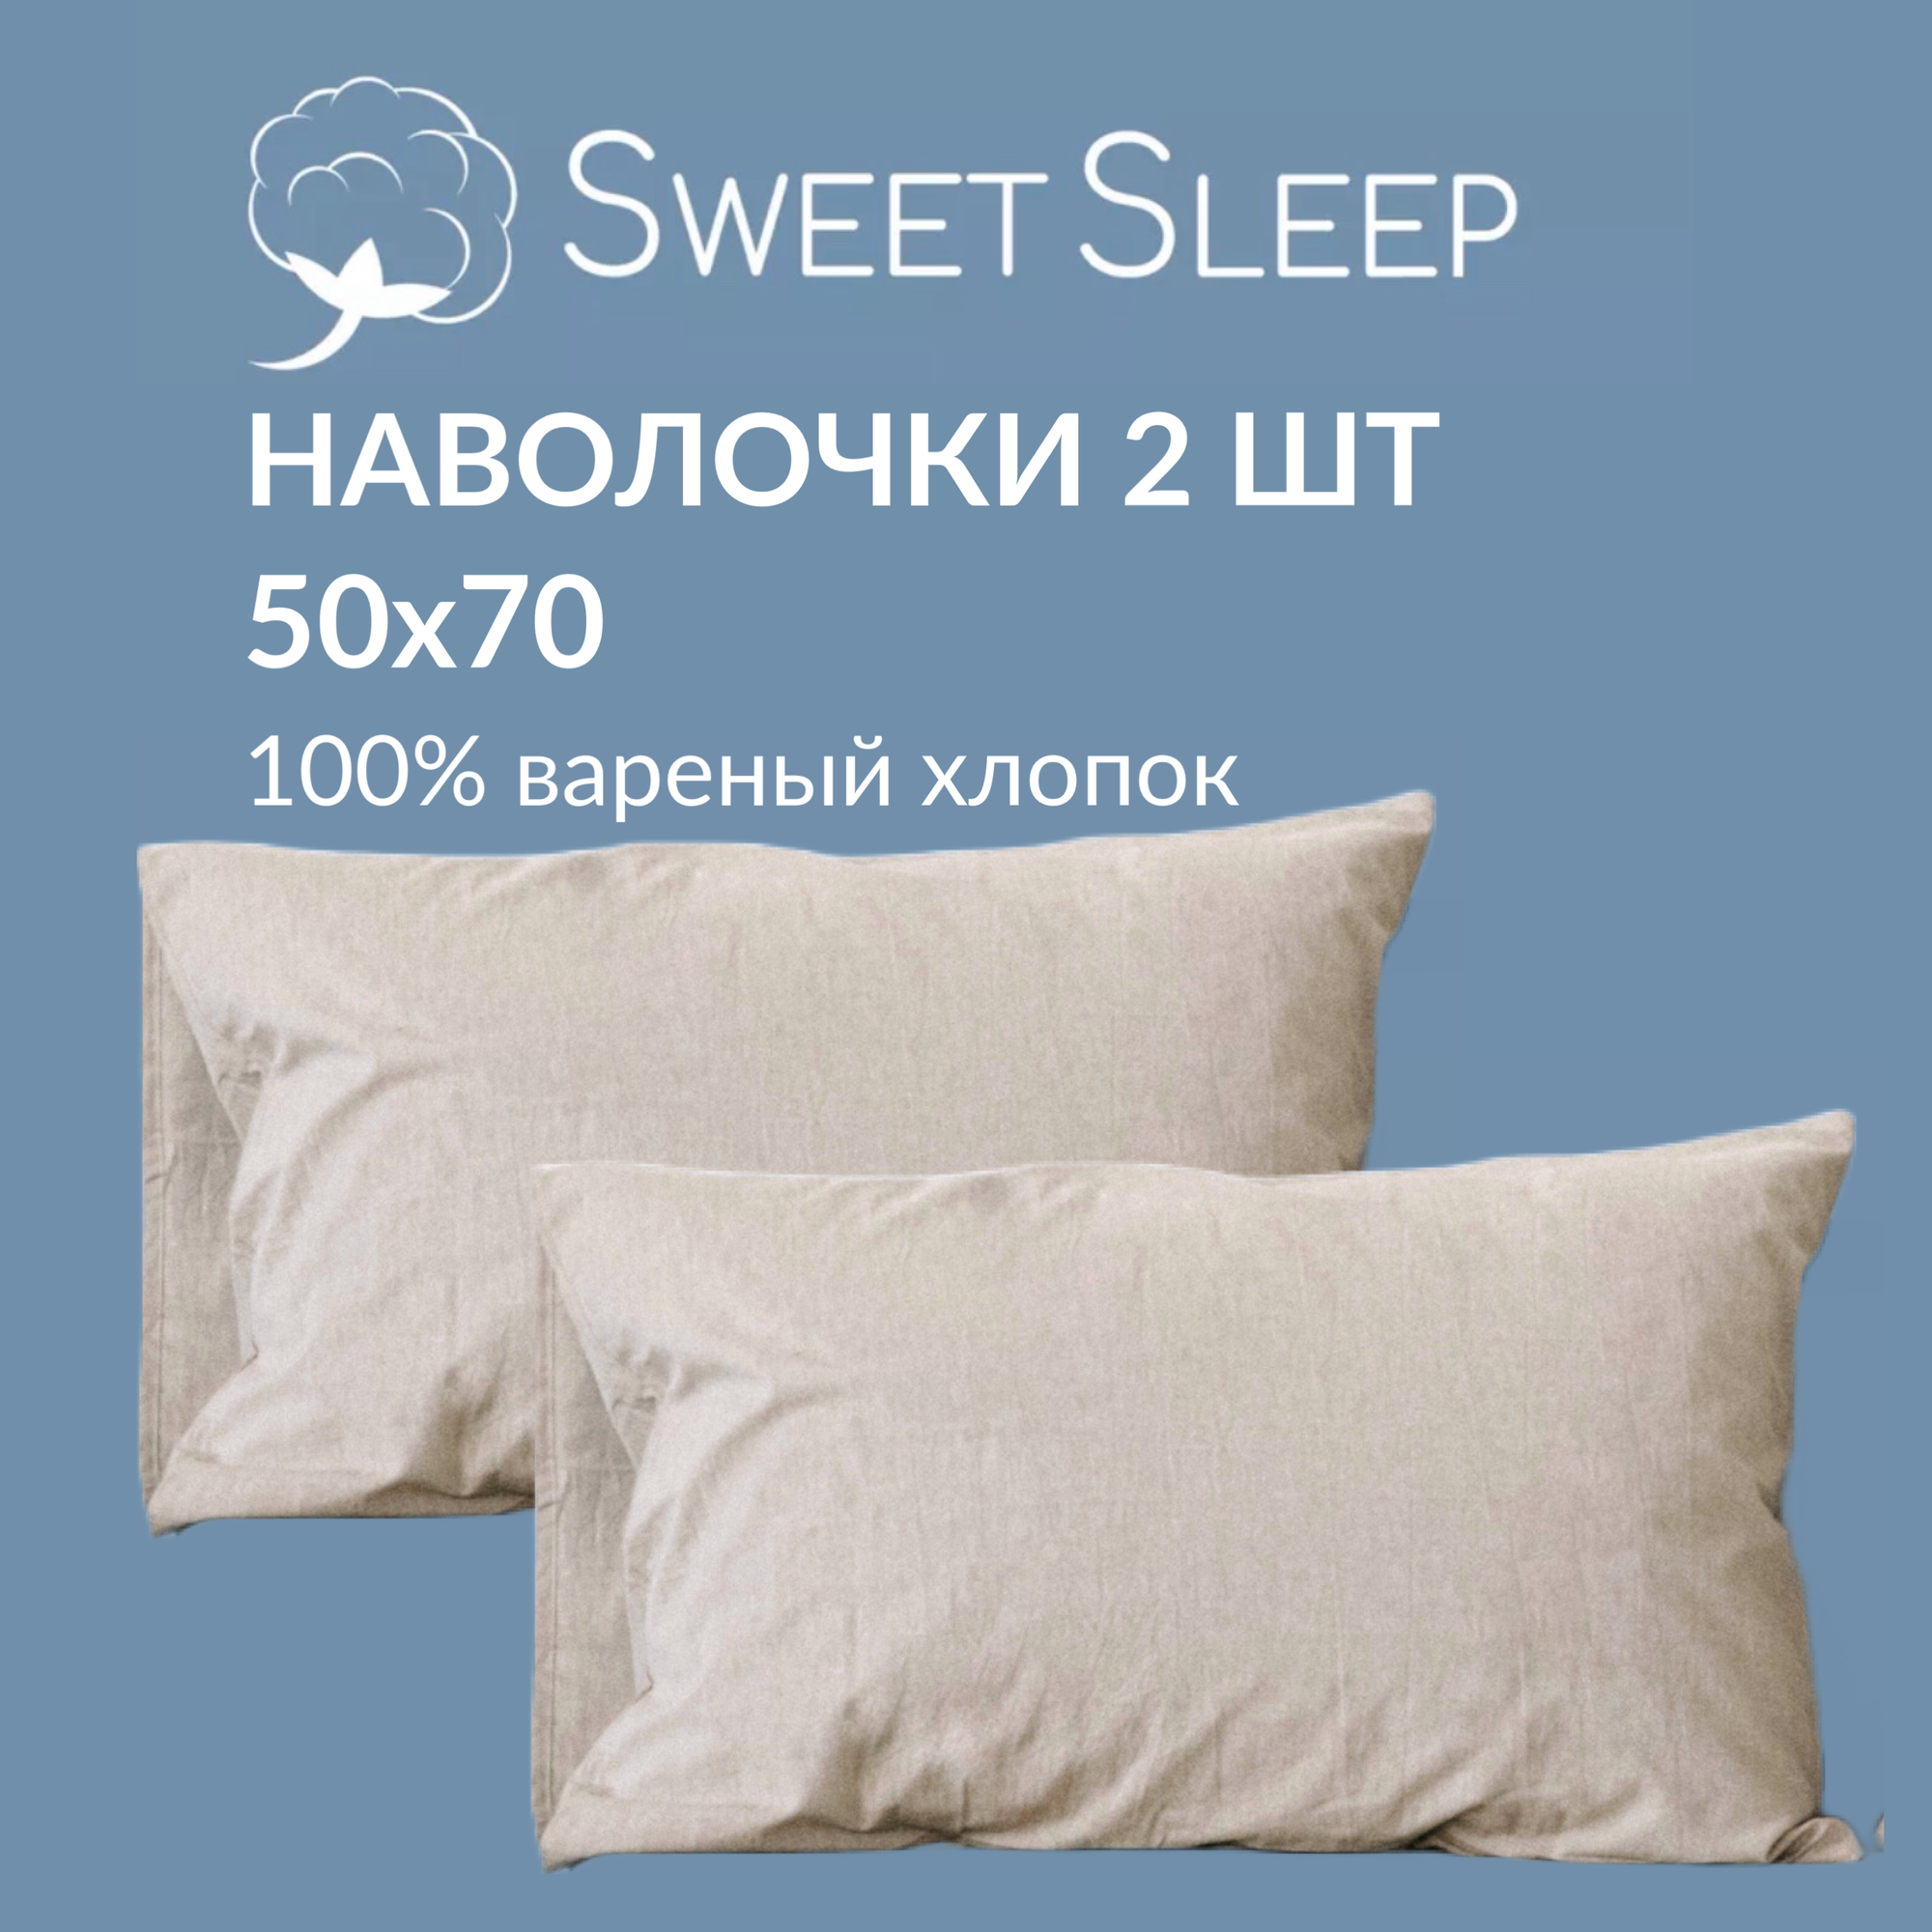 Набор наволочек из варёного хлопка Sweet Sleep 50х70, светло-бежевый